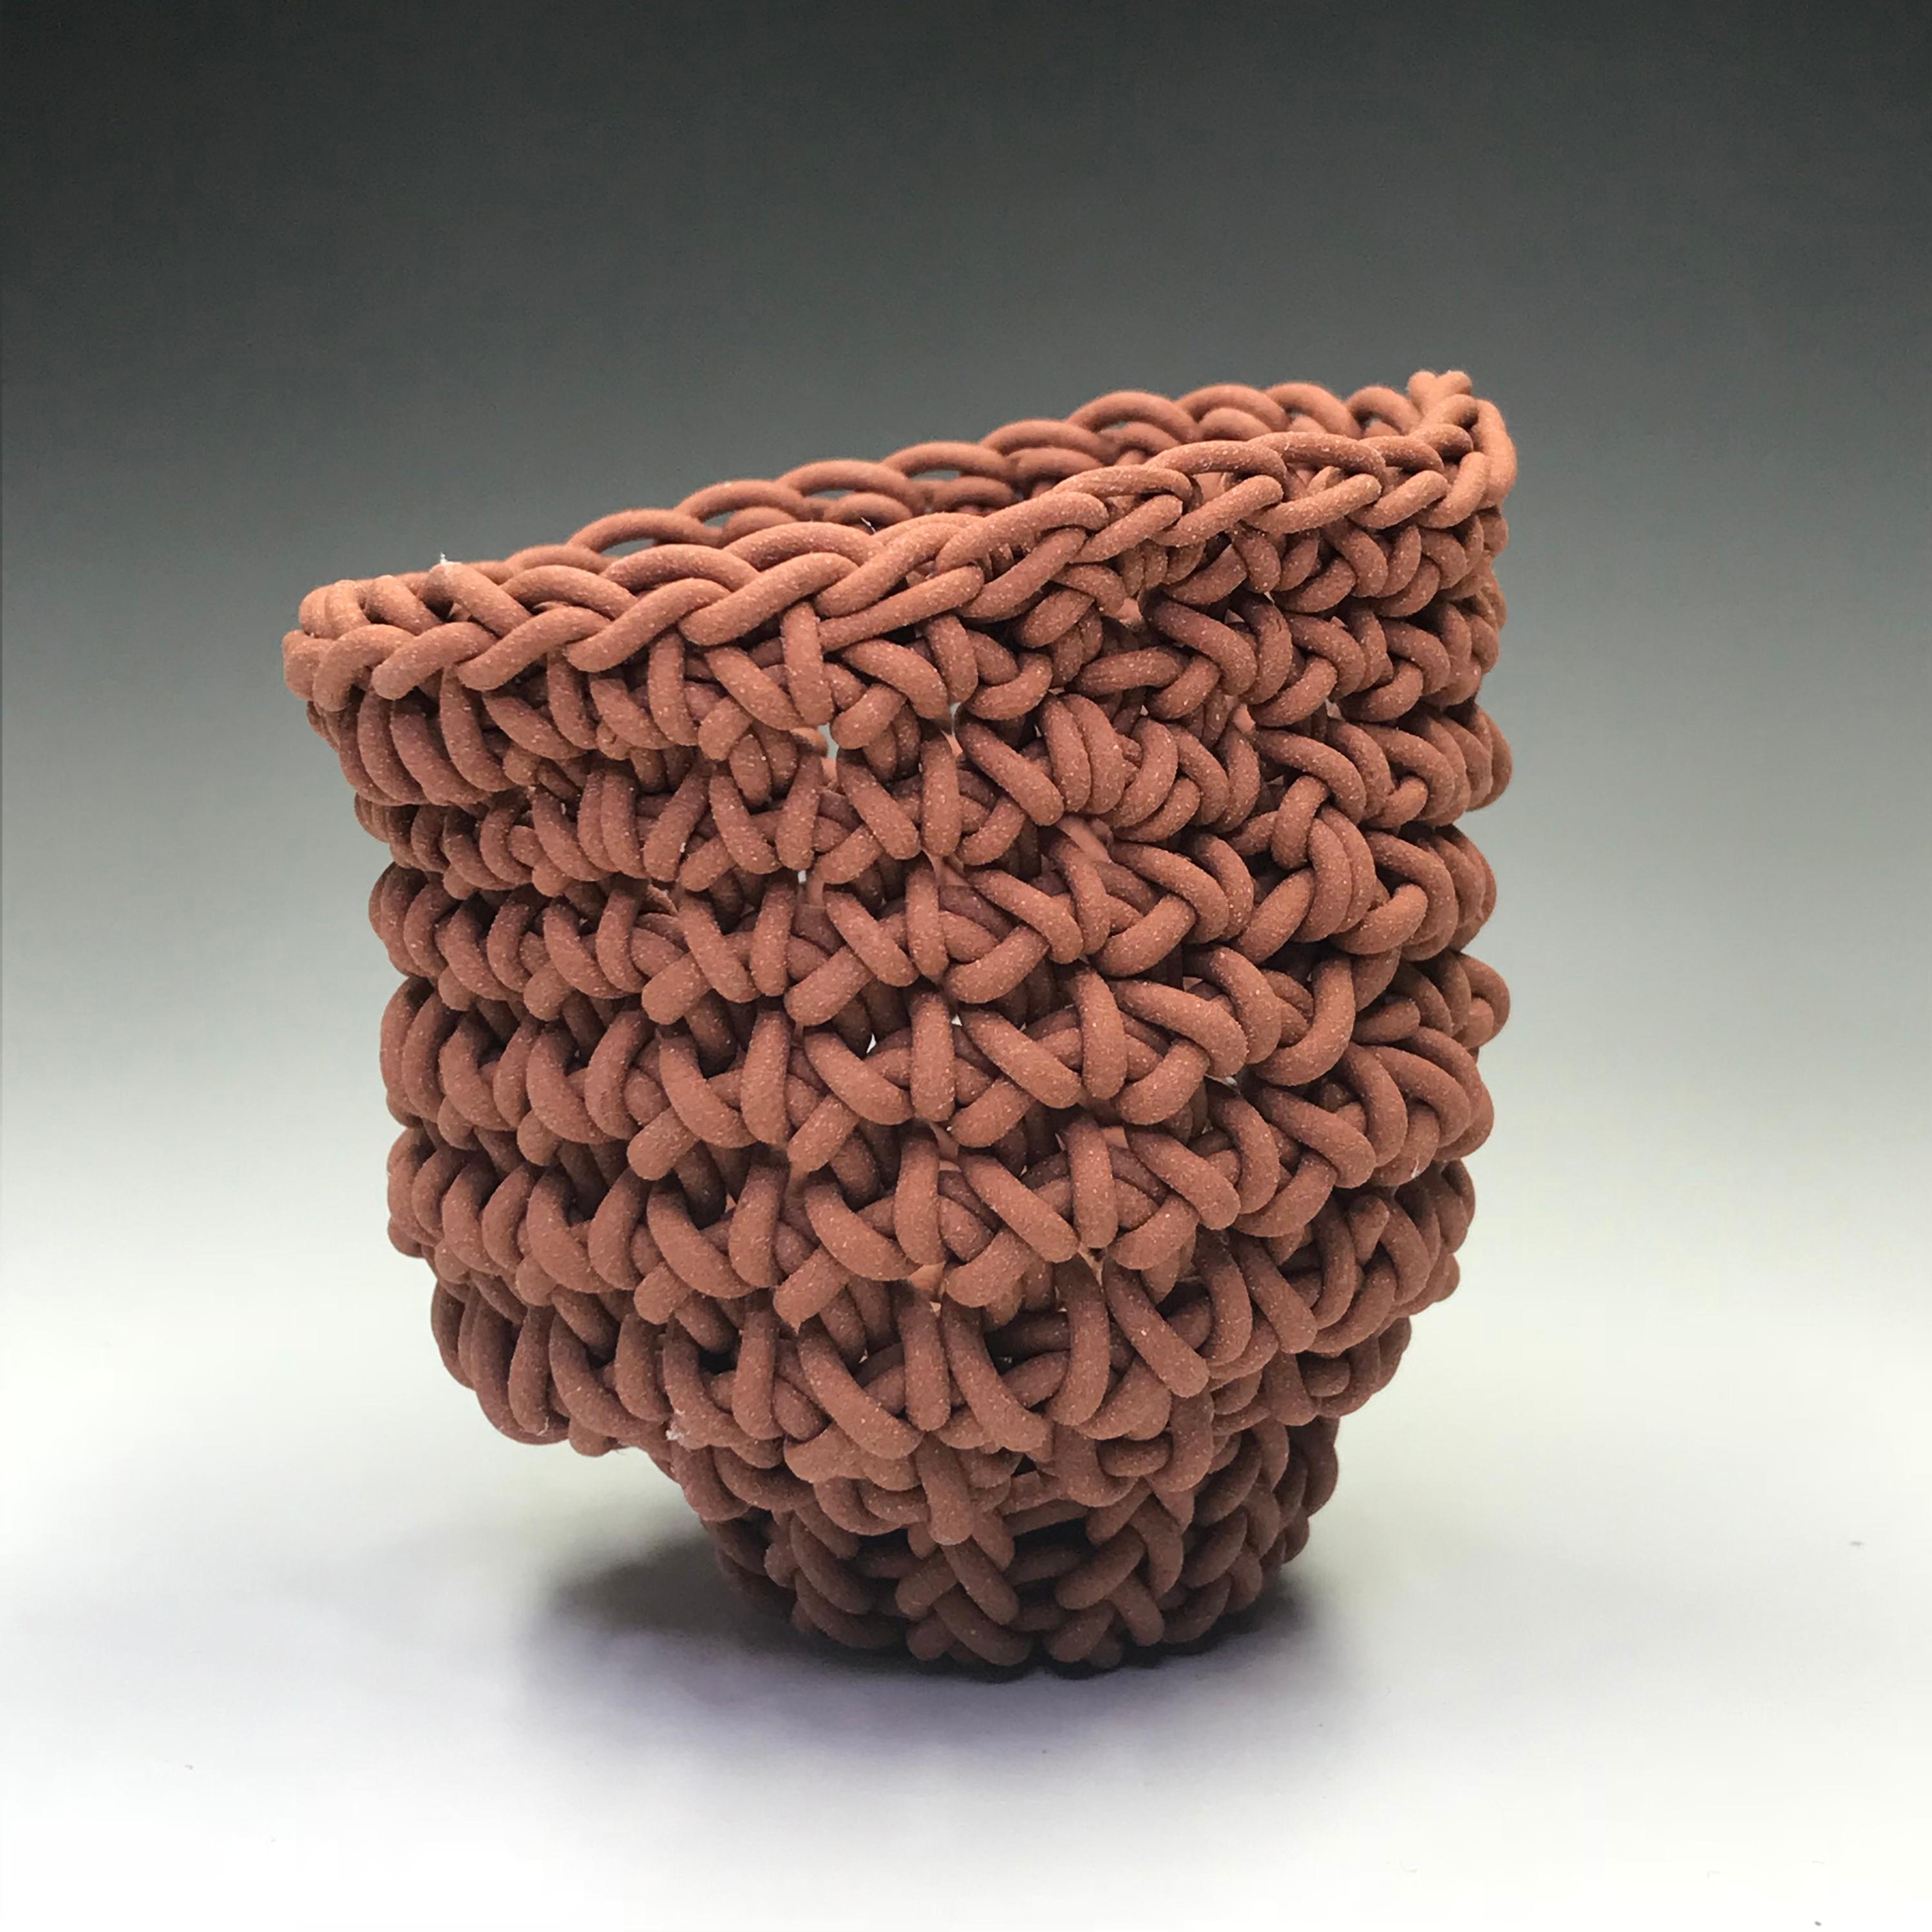 Hand Crocheted Ceramic "Tea Bowl", Unique Contemporary Ceramic Sculpture  - Mixed Media Art by Jeremy Brooks